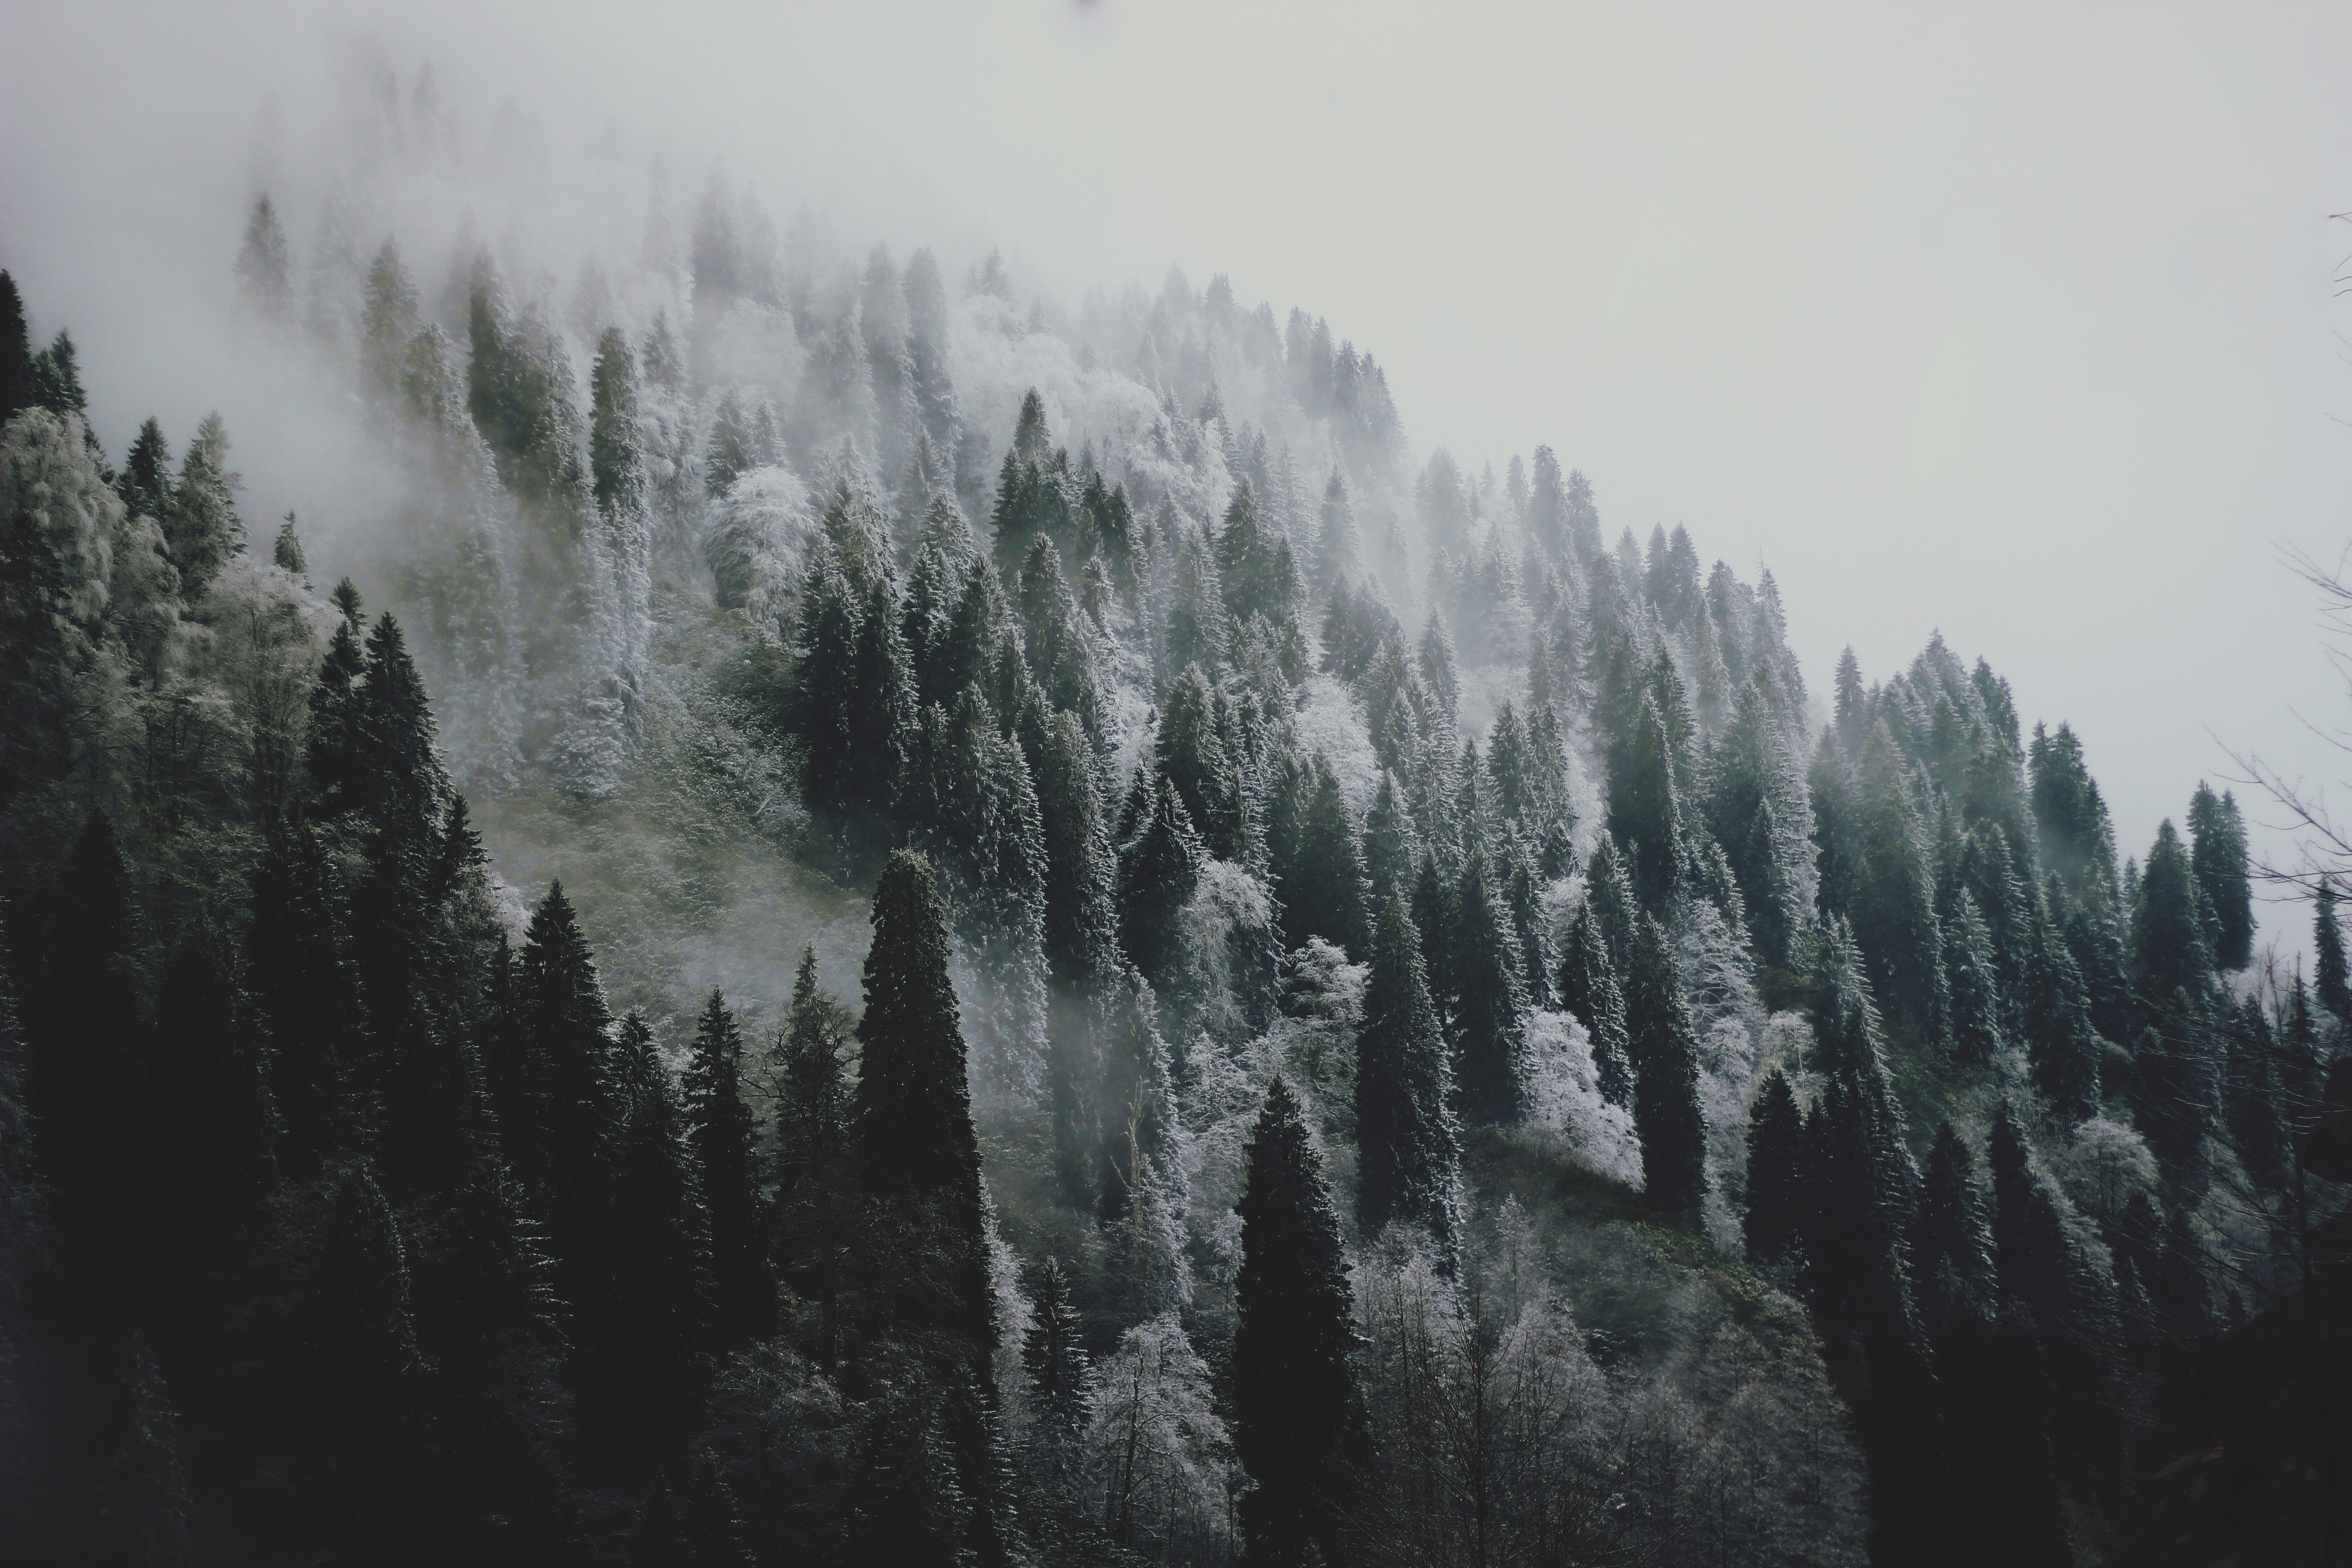 Landscape Winter Snow Forest Trees December Month Mist Film Grain Photography Nature Cold 5184x3456